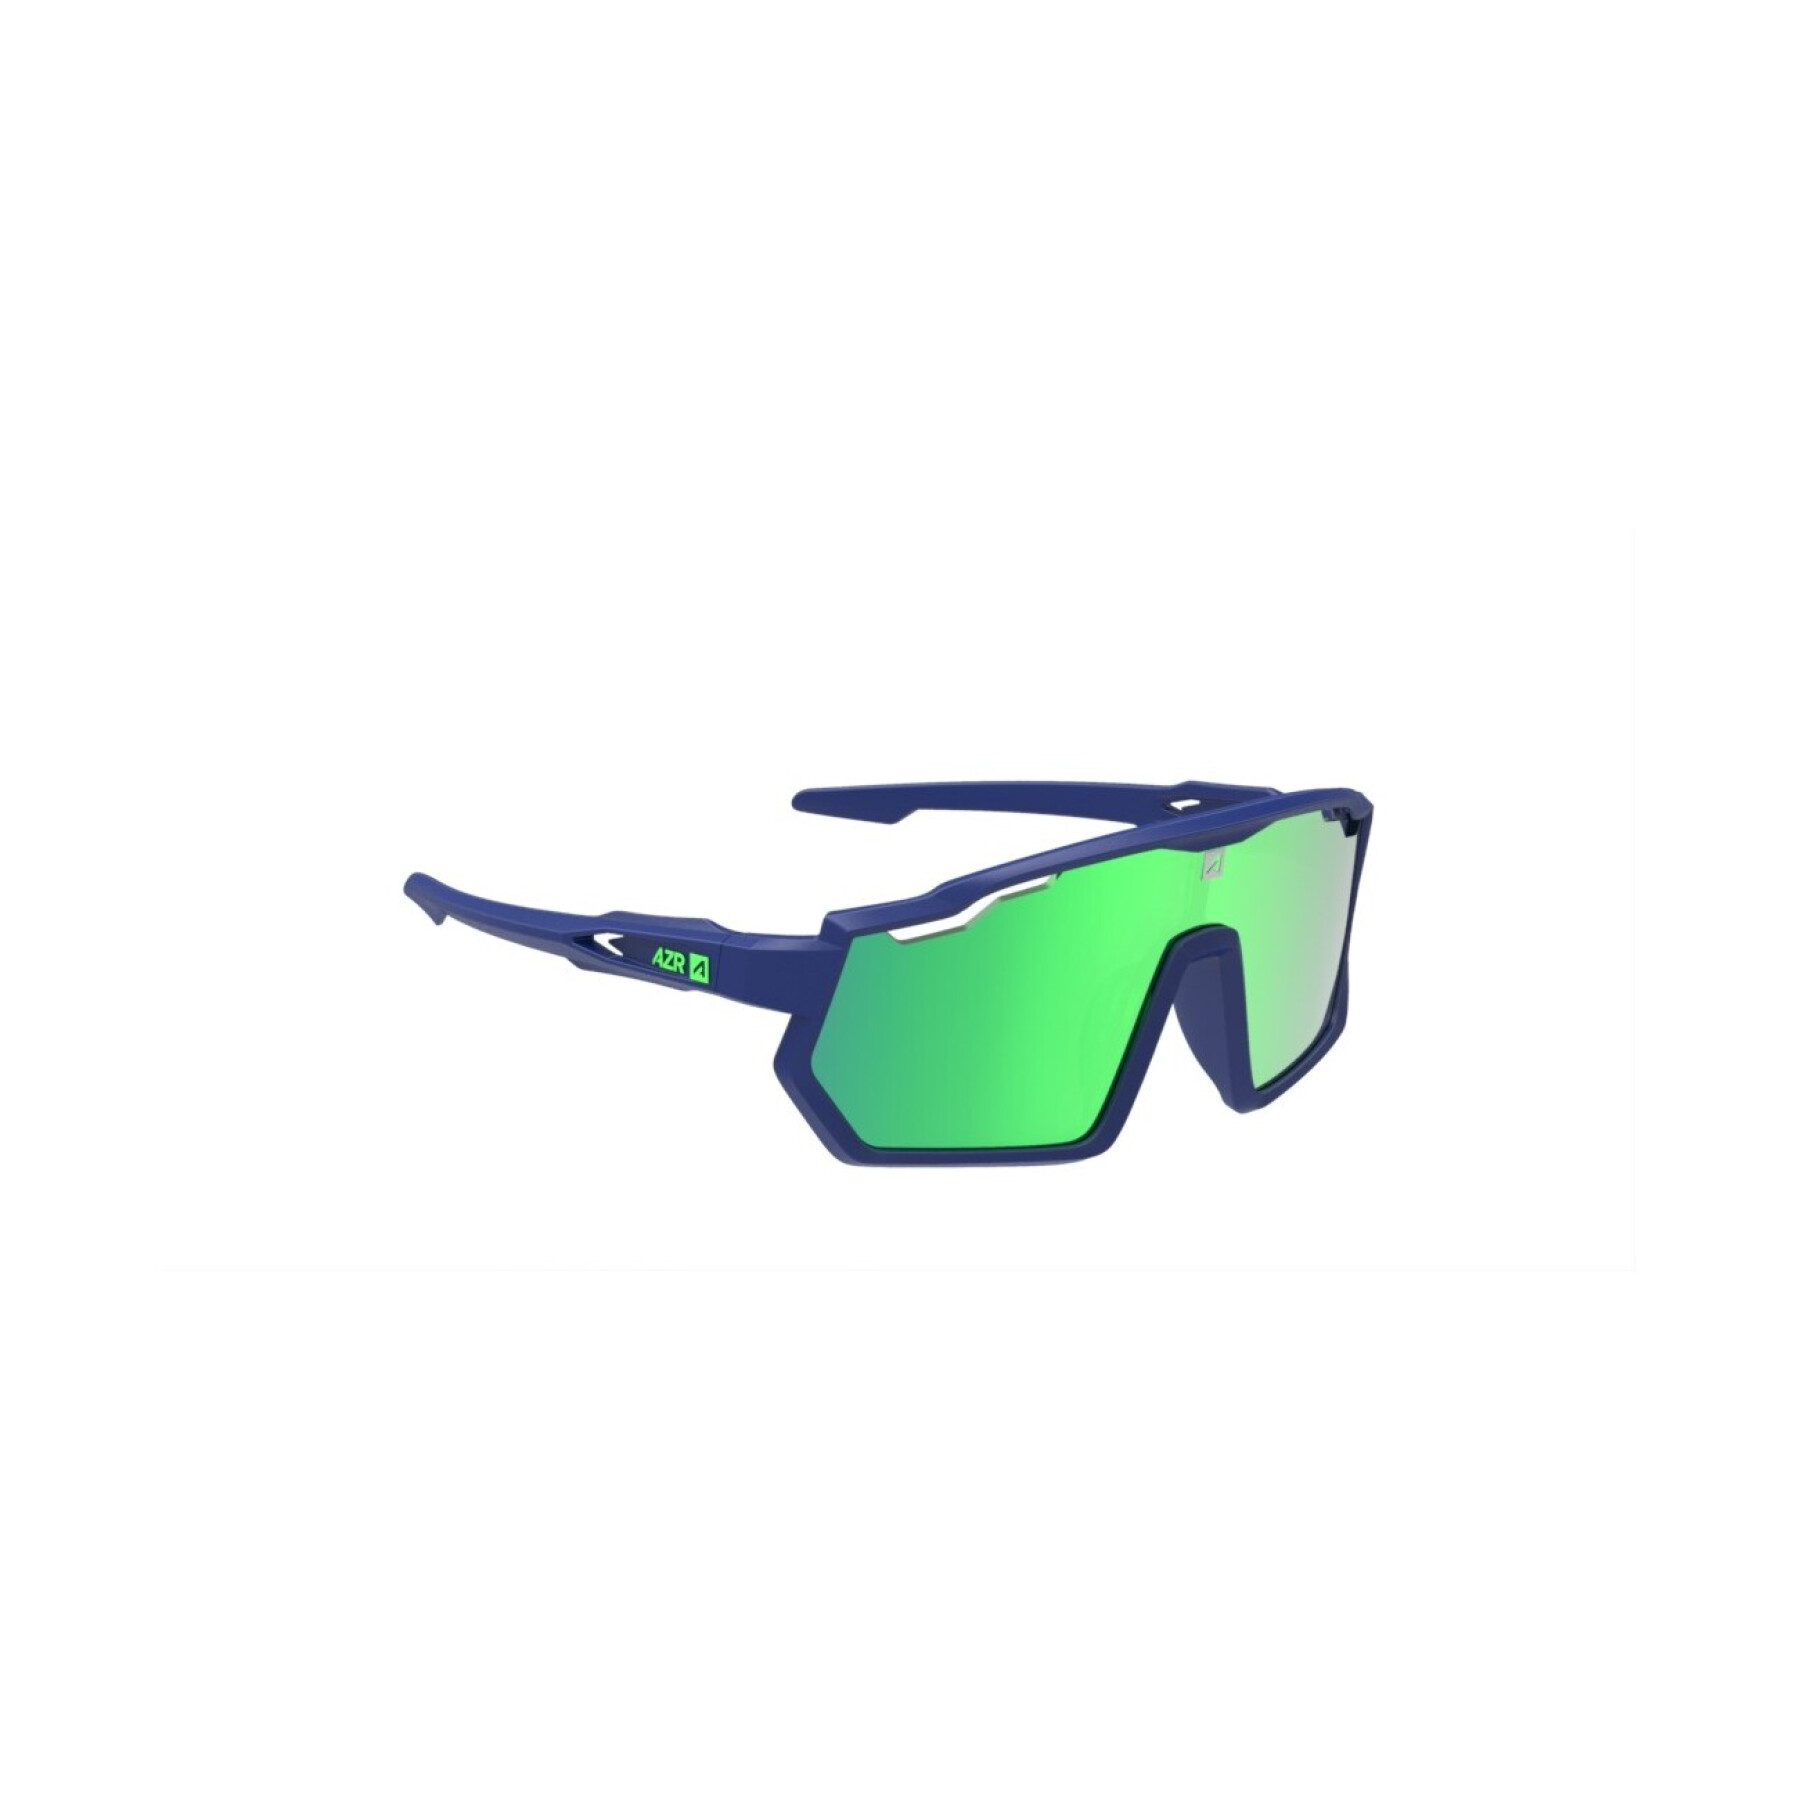 Children's sunglasses AZR Pro Kromic Pro Race